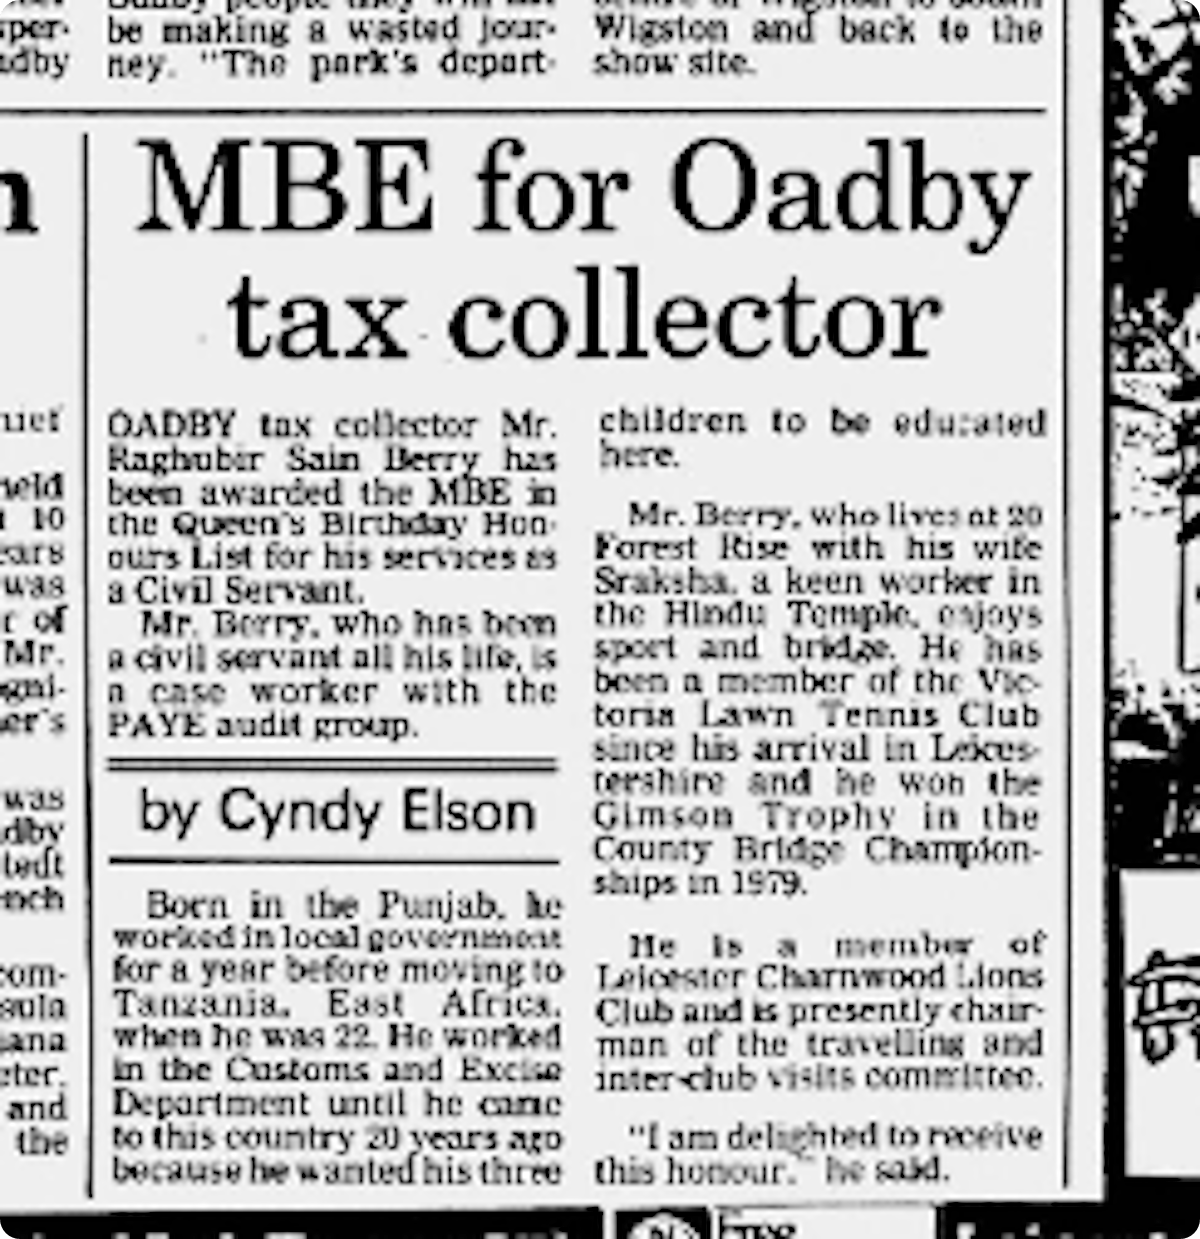 Oadby & Wigston Mail 17 June 1988